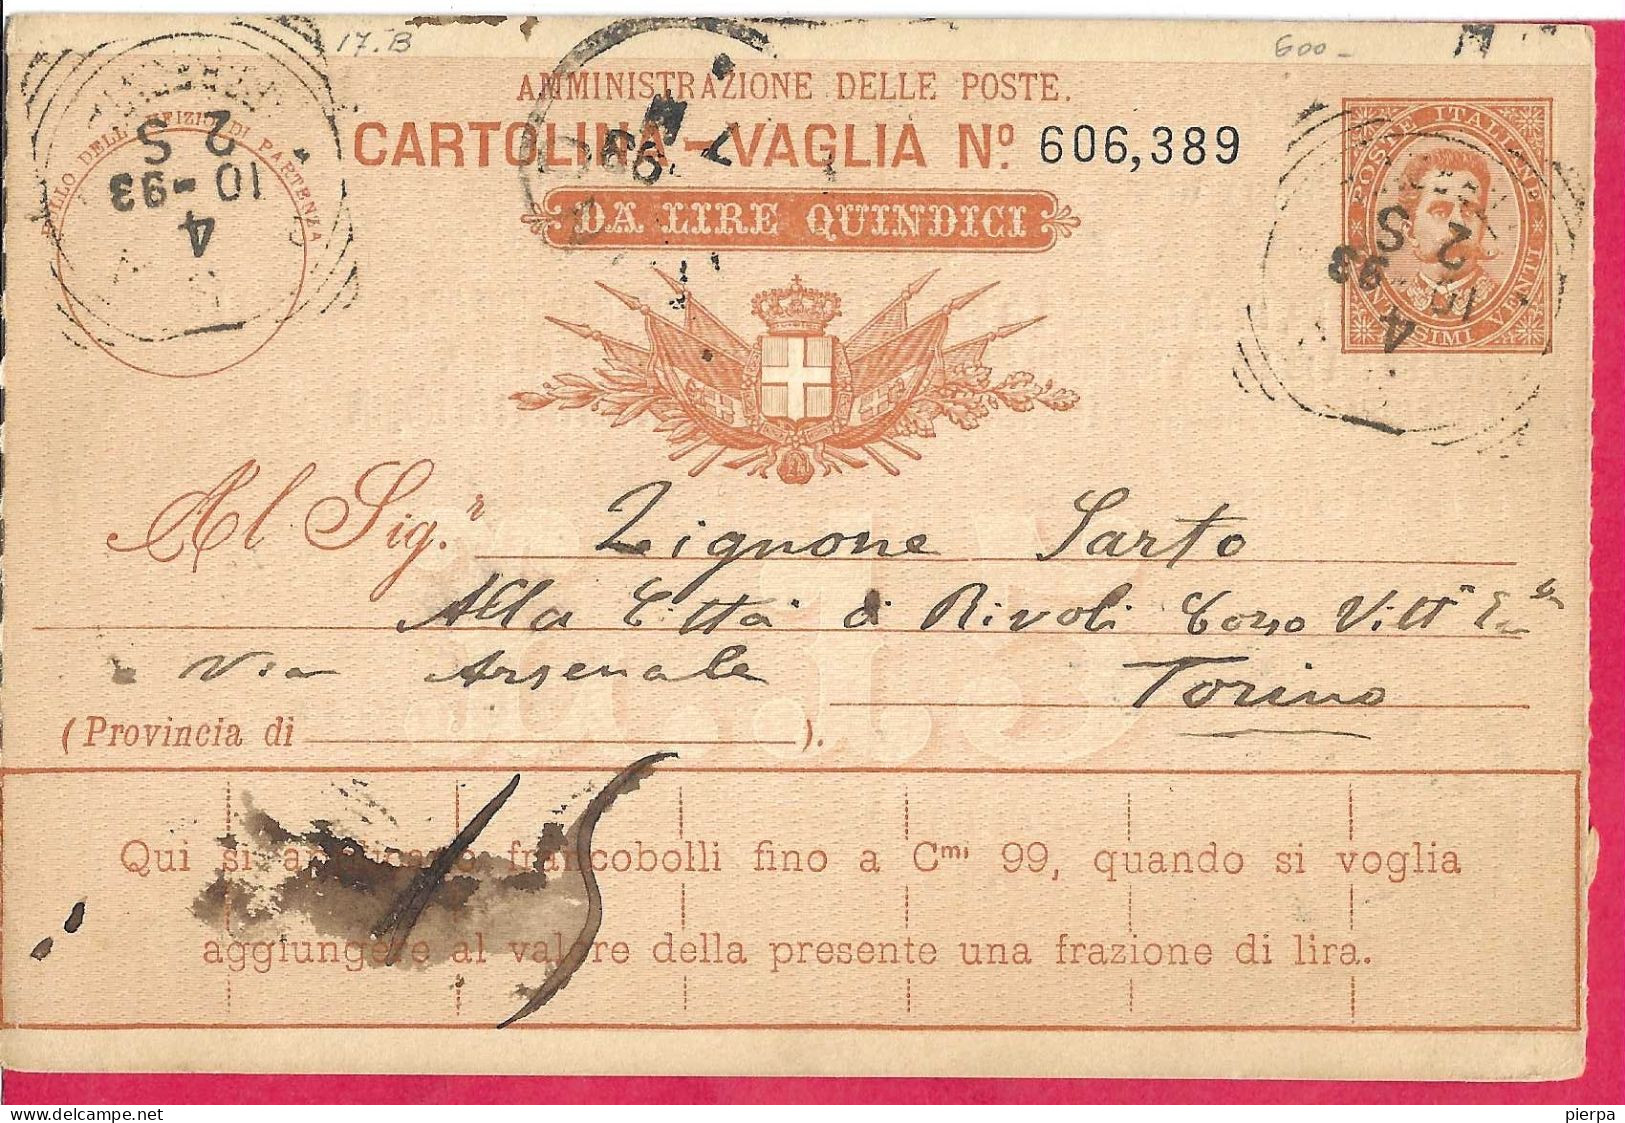 INTERO CARTOLINA-VAGLIA UMBERTO C.20 DA LIRE 15 (CAT. INT. 8Ba) -VIAGGIATA DA PISA*4.10.93* PER TORINO - Entiers Postaux